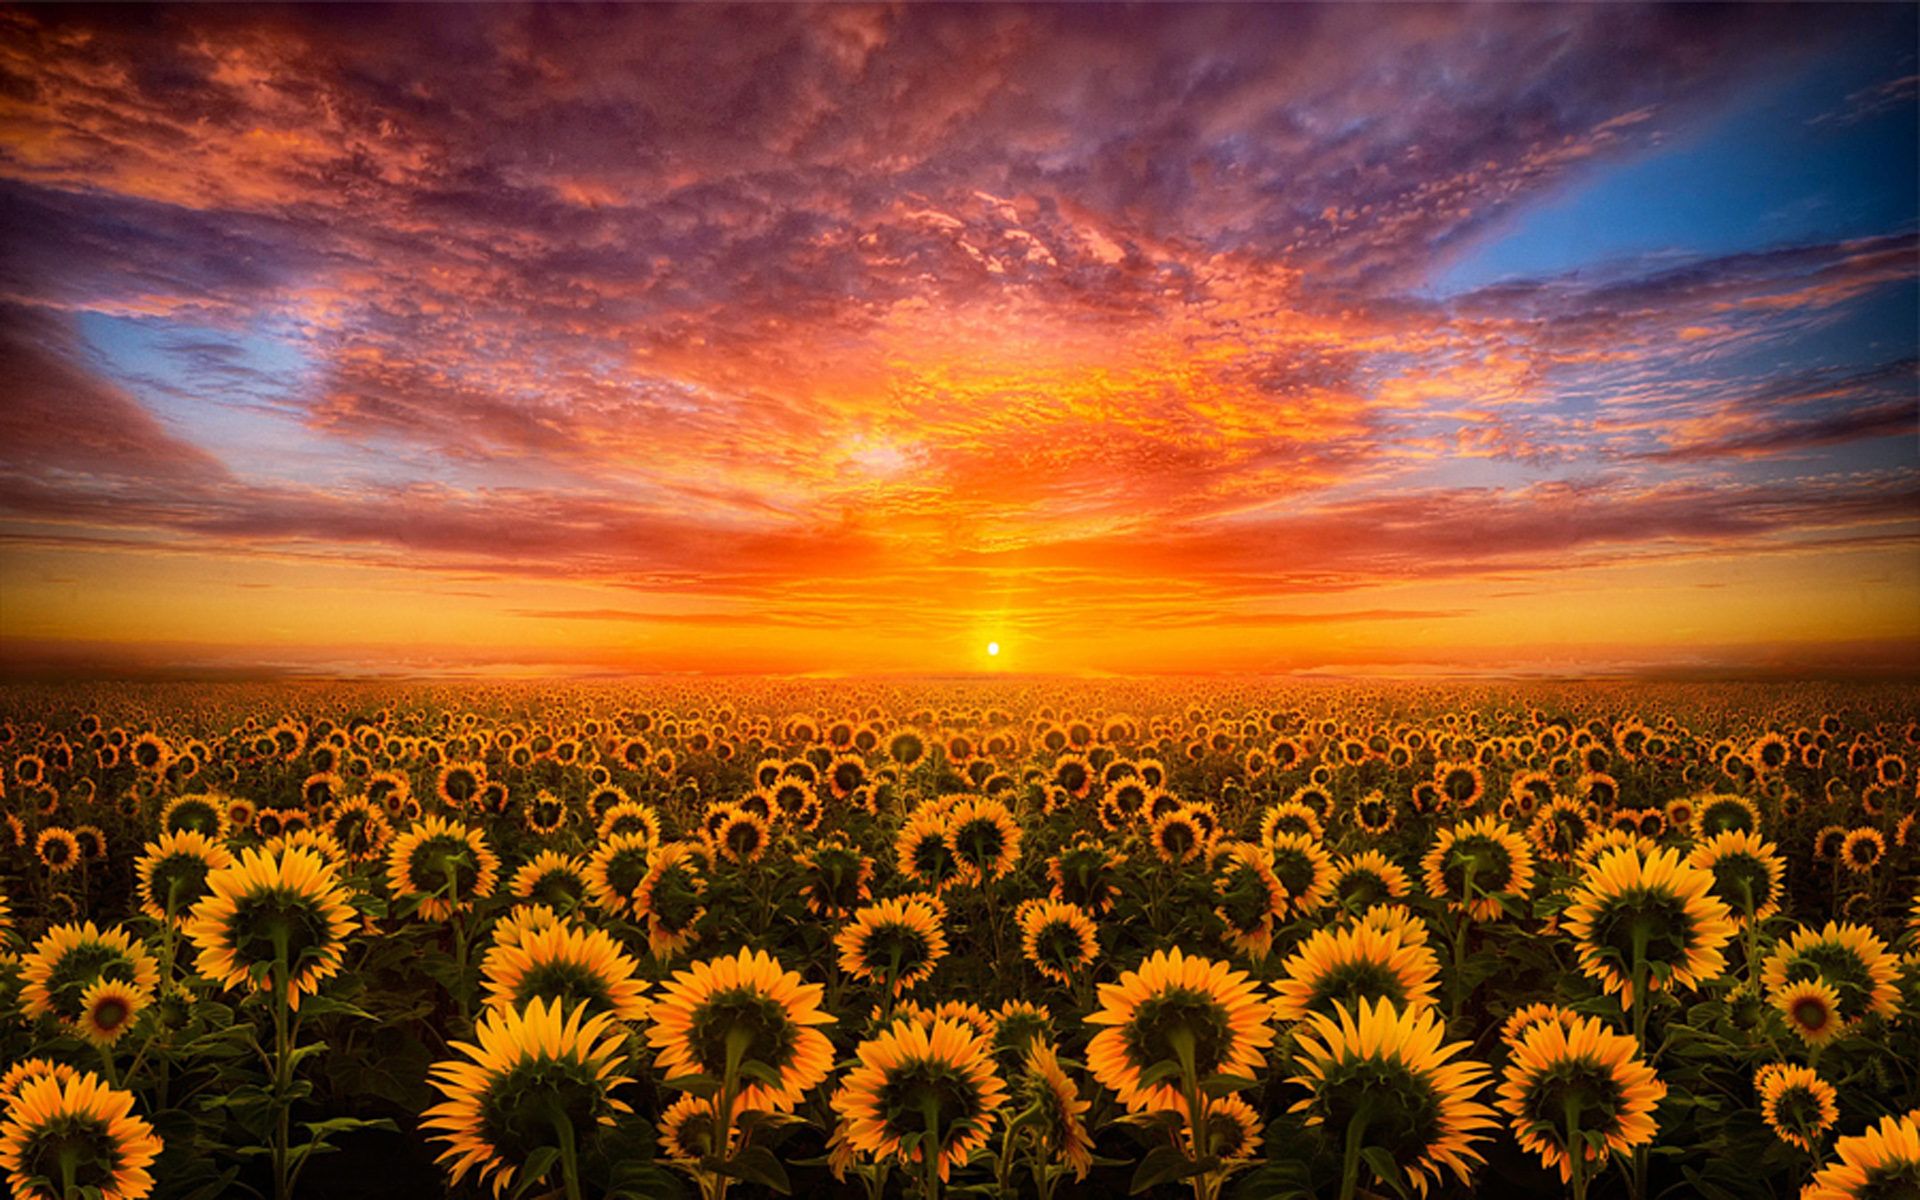 Sunset Red Sky Cloud Field With Sunflower HD Desktop Wallpaper For Mobile : Wallpaper13.com